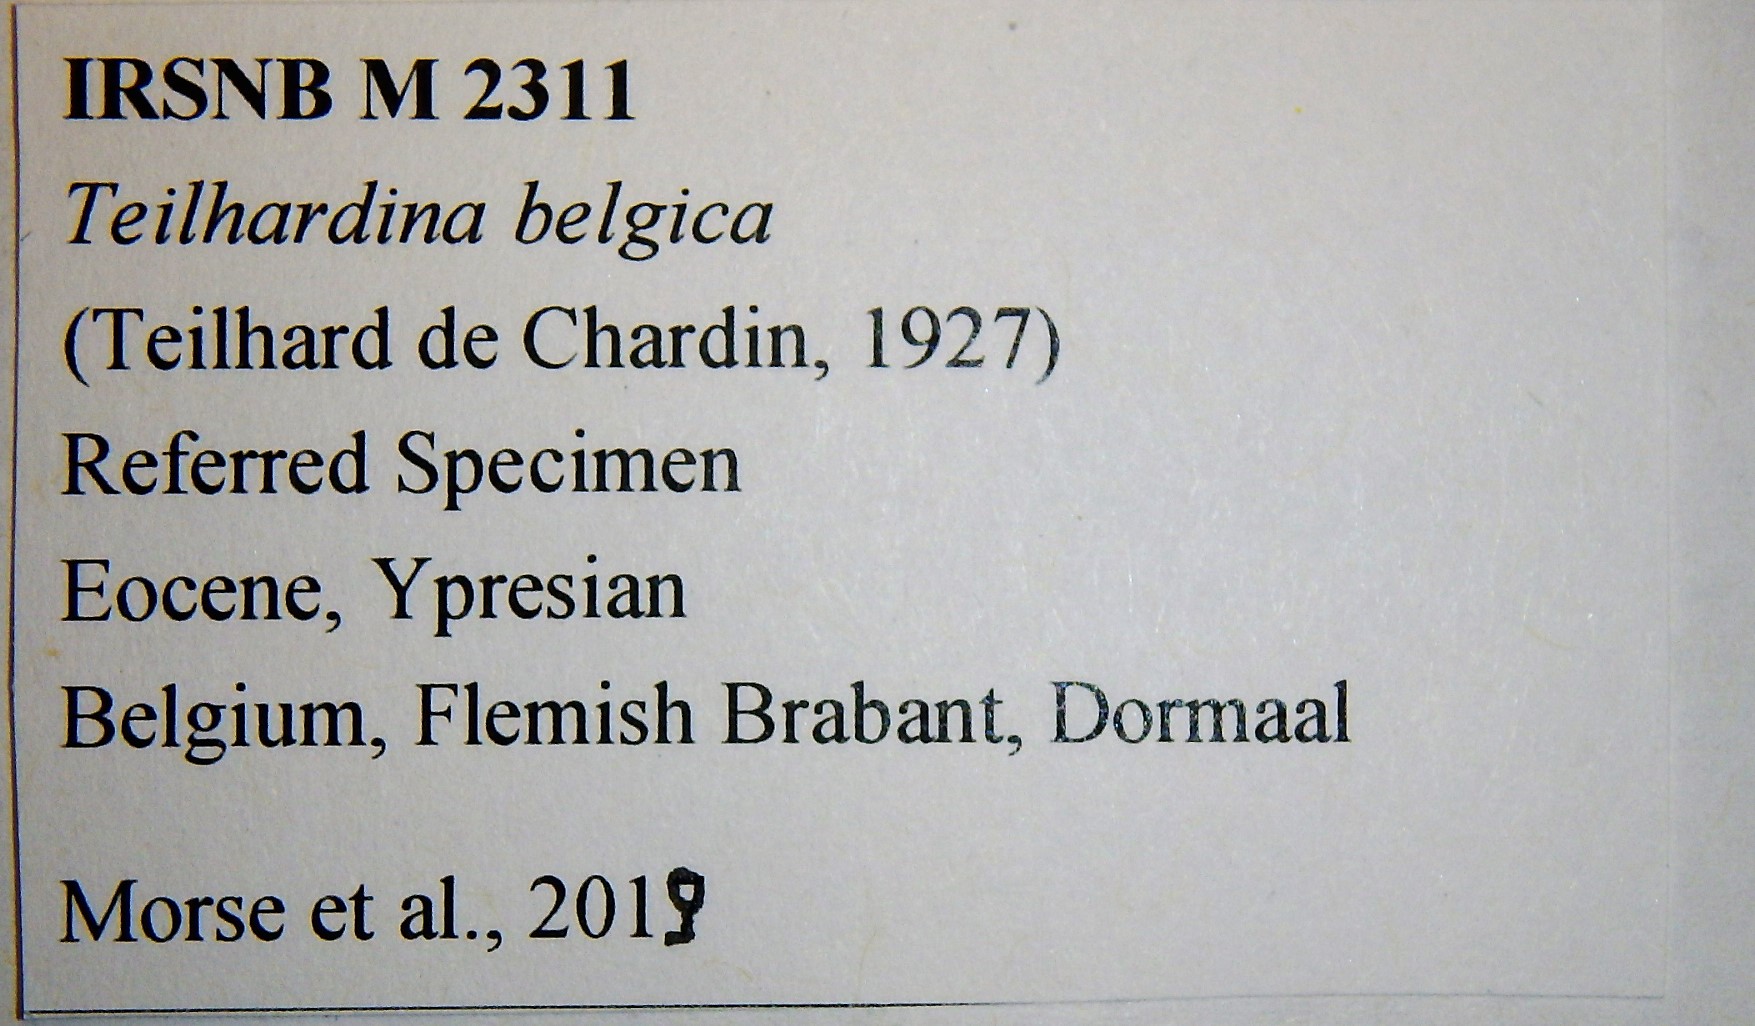 IRSNB M 2311 Label